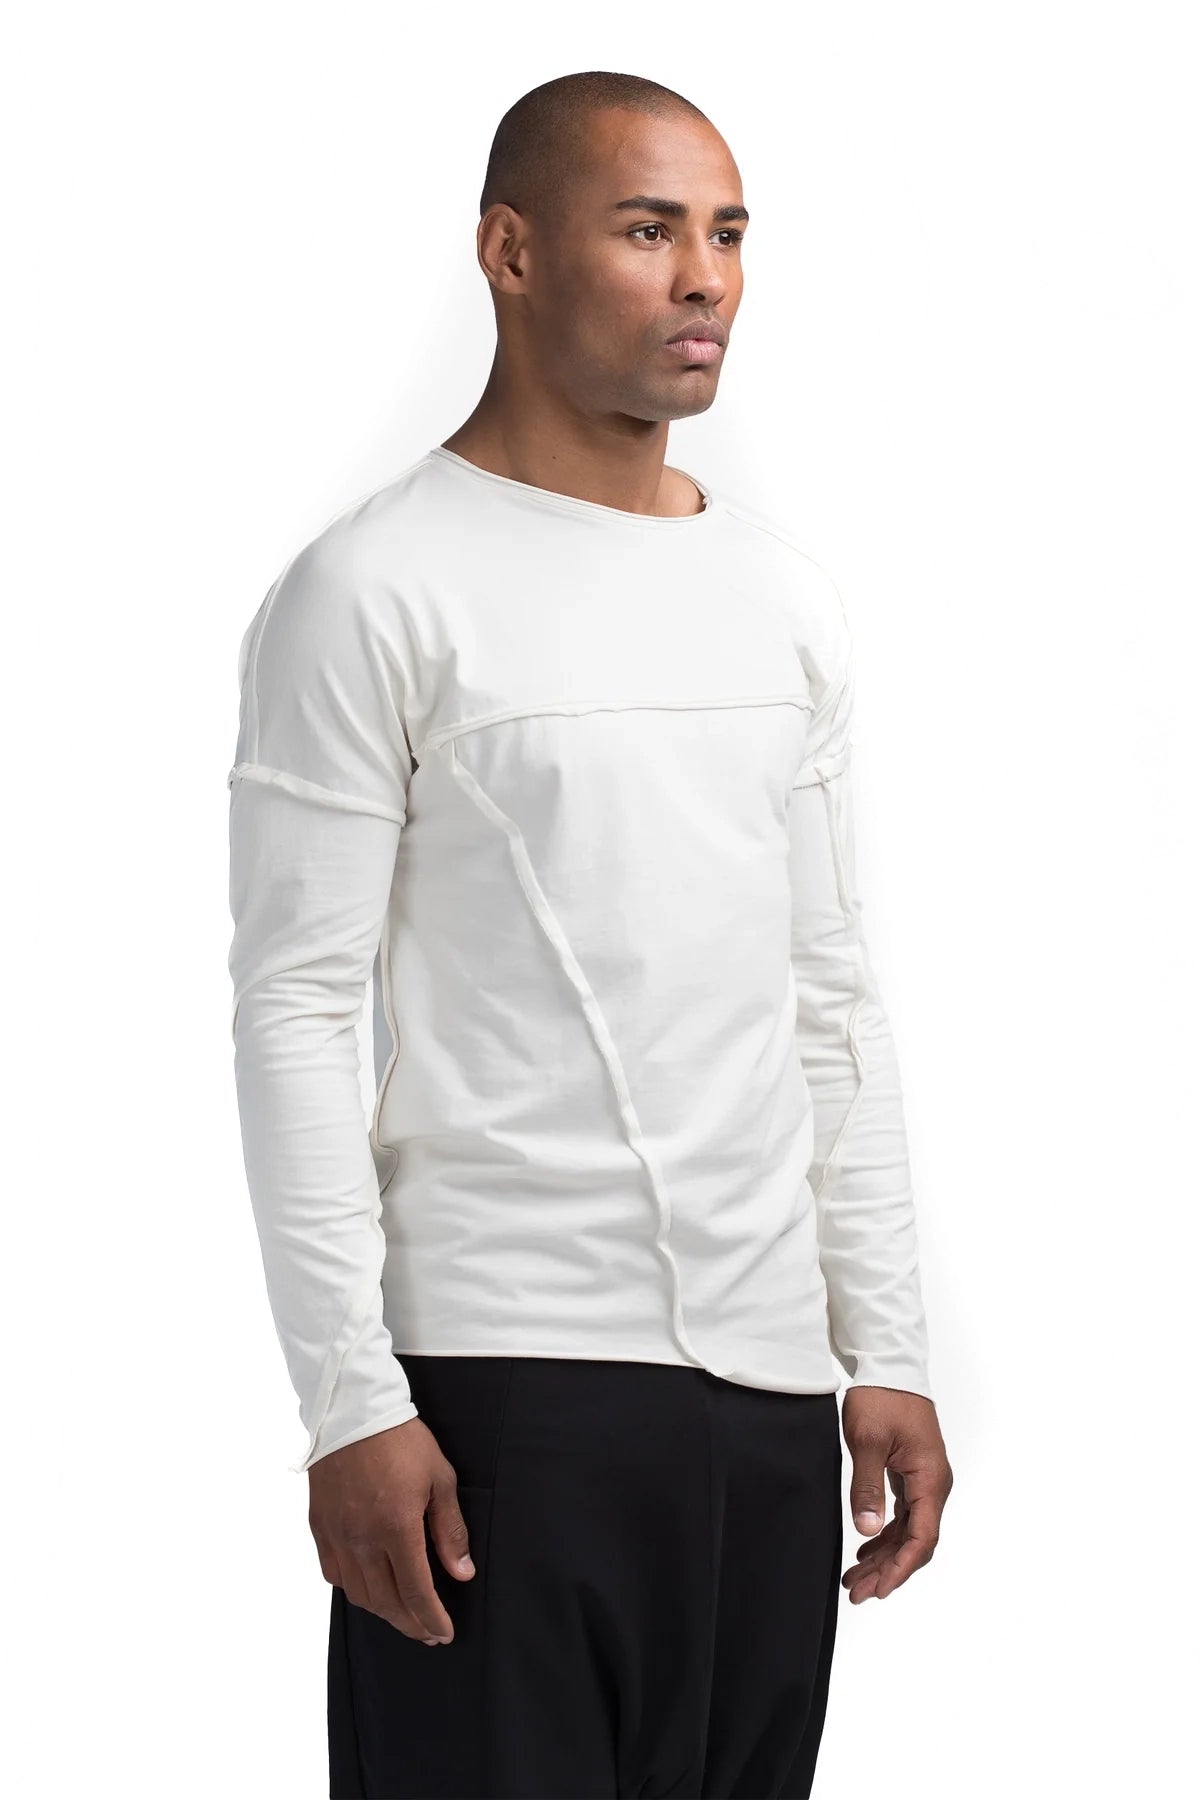 Bundle: 3x White Long Sleeve T-shirt